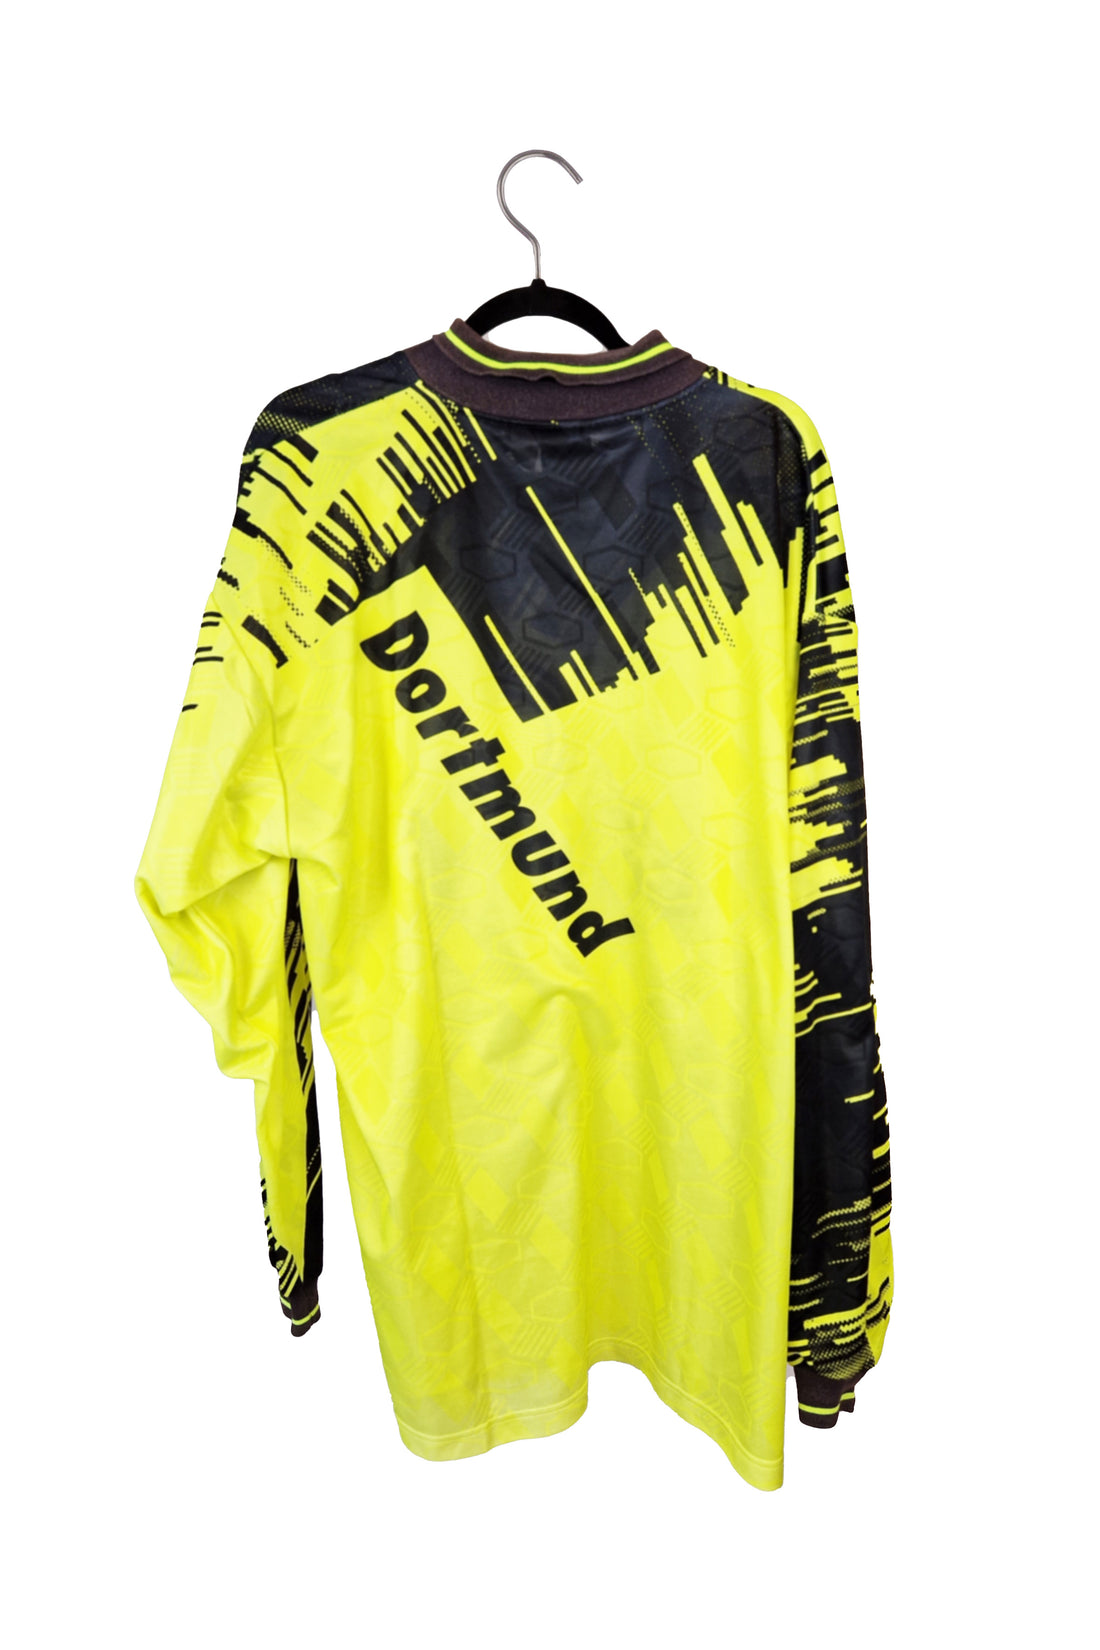 Borussia Dortmund 1993 - 1994 L/S Home Football Shirt